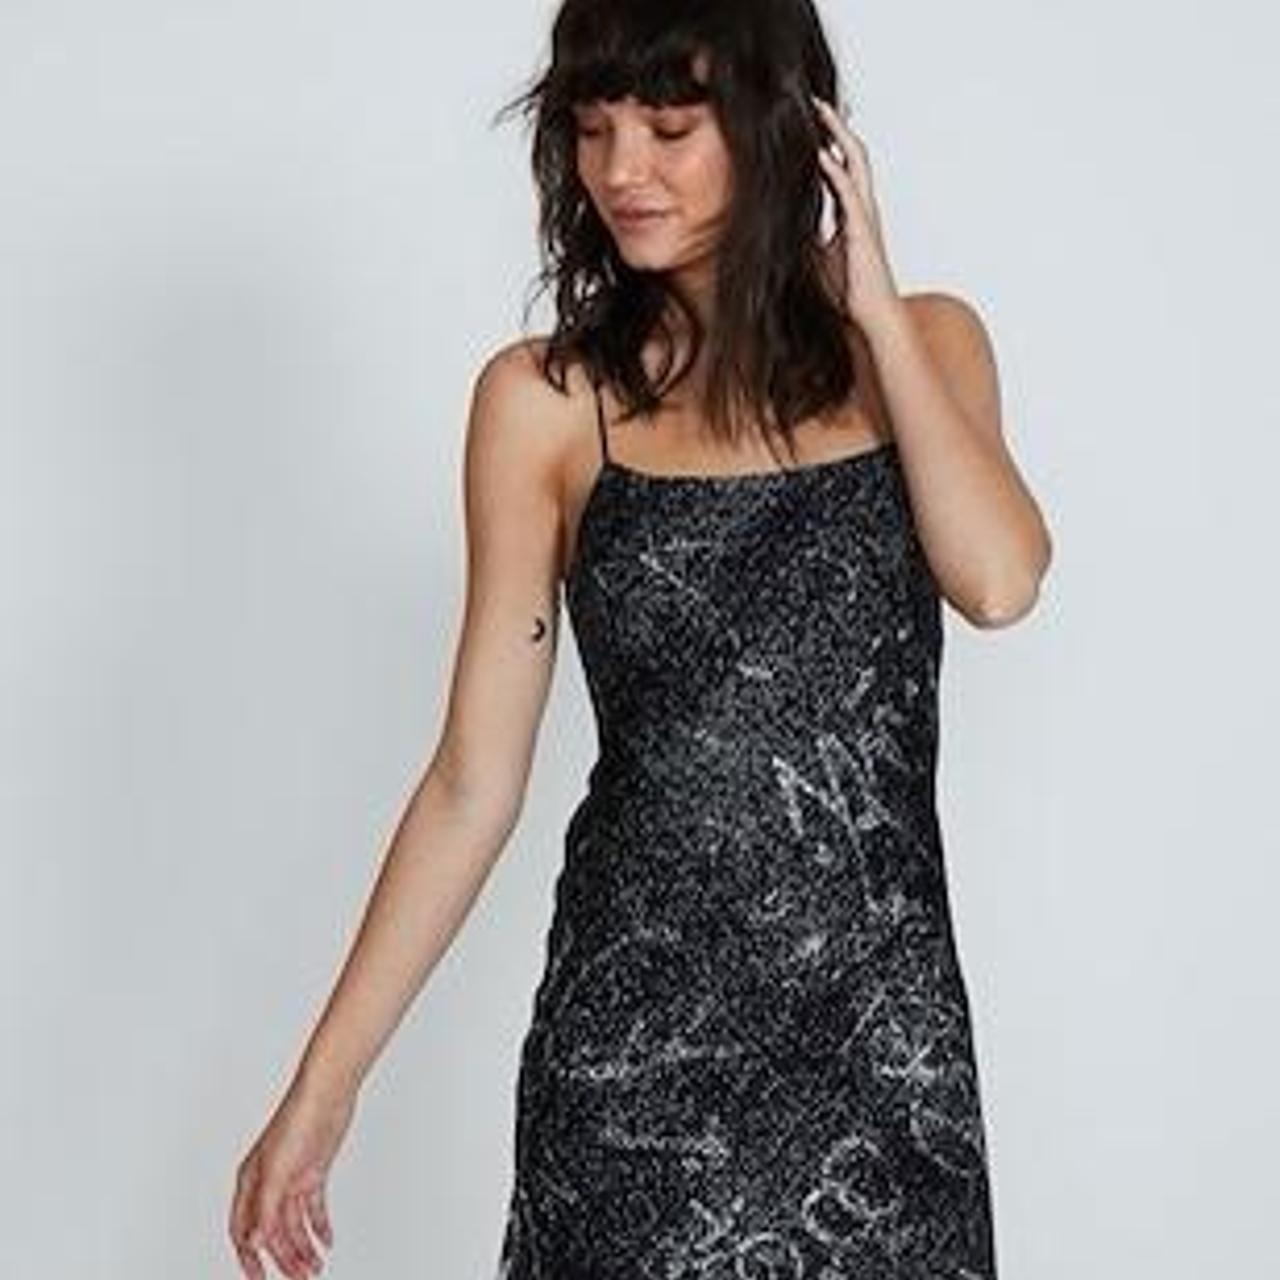 Product Image 4 - Brand new slip dress. Adjustable